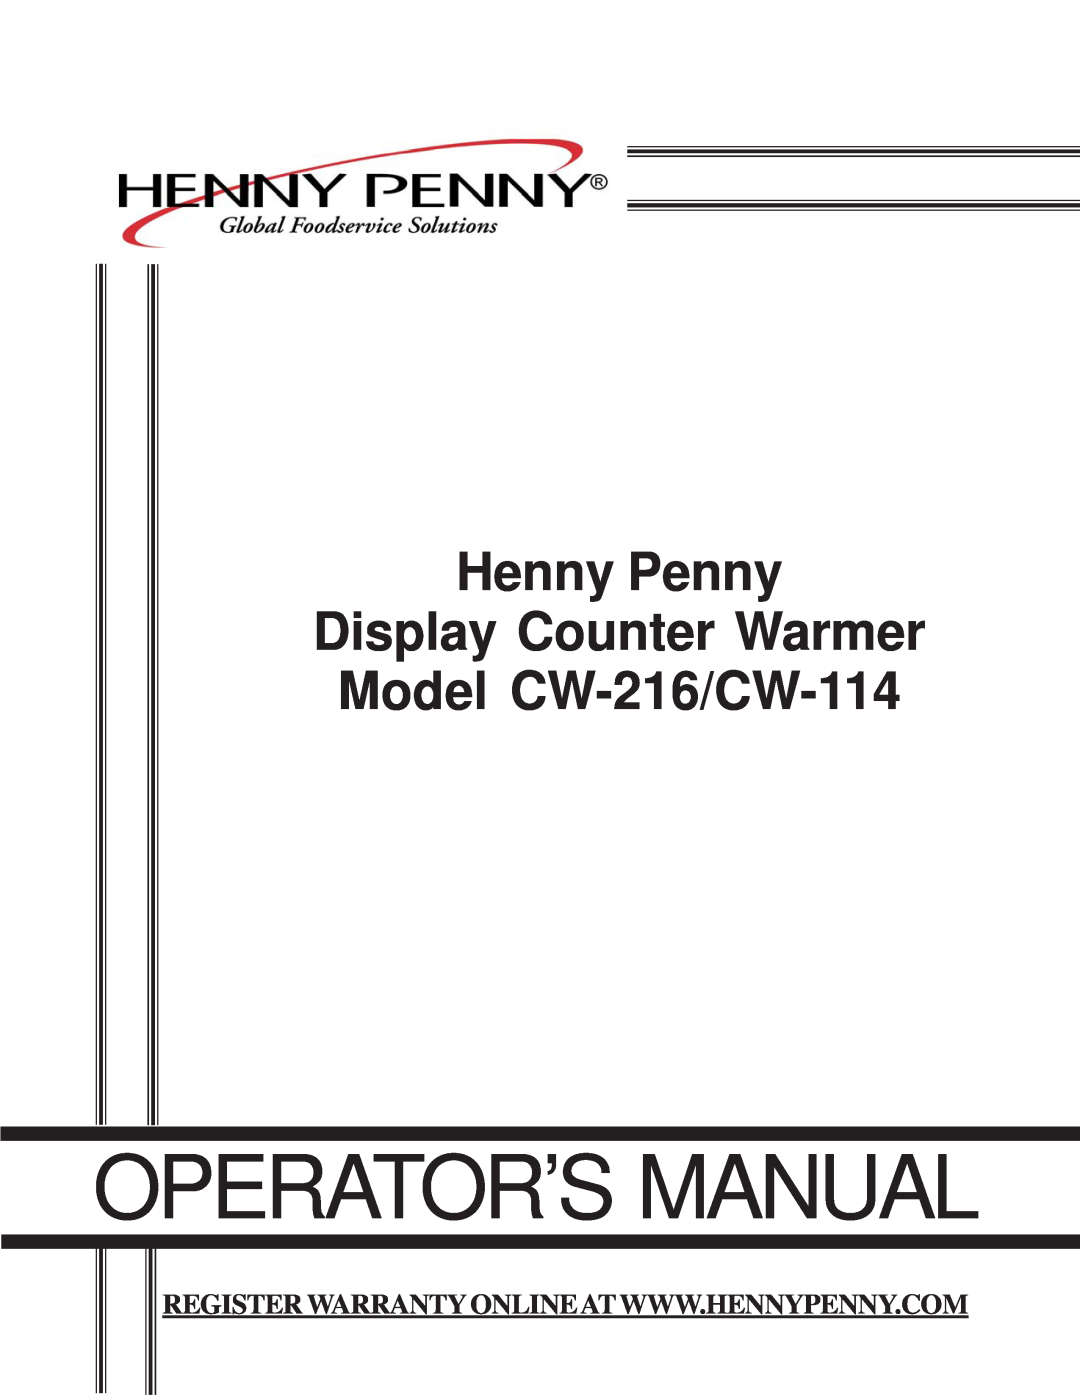 Henny Penny warranty Operator’S Manual, Henny Penny Display Counter Warmer, Model CW-216/CW-114 